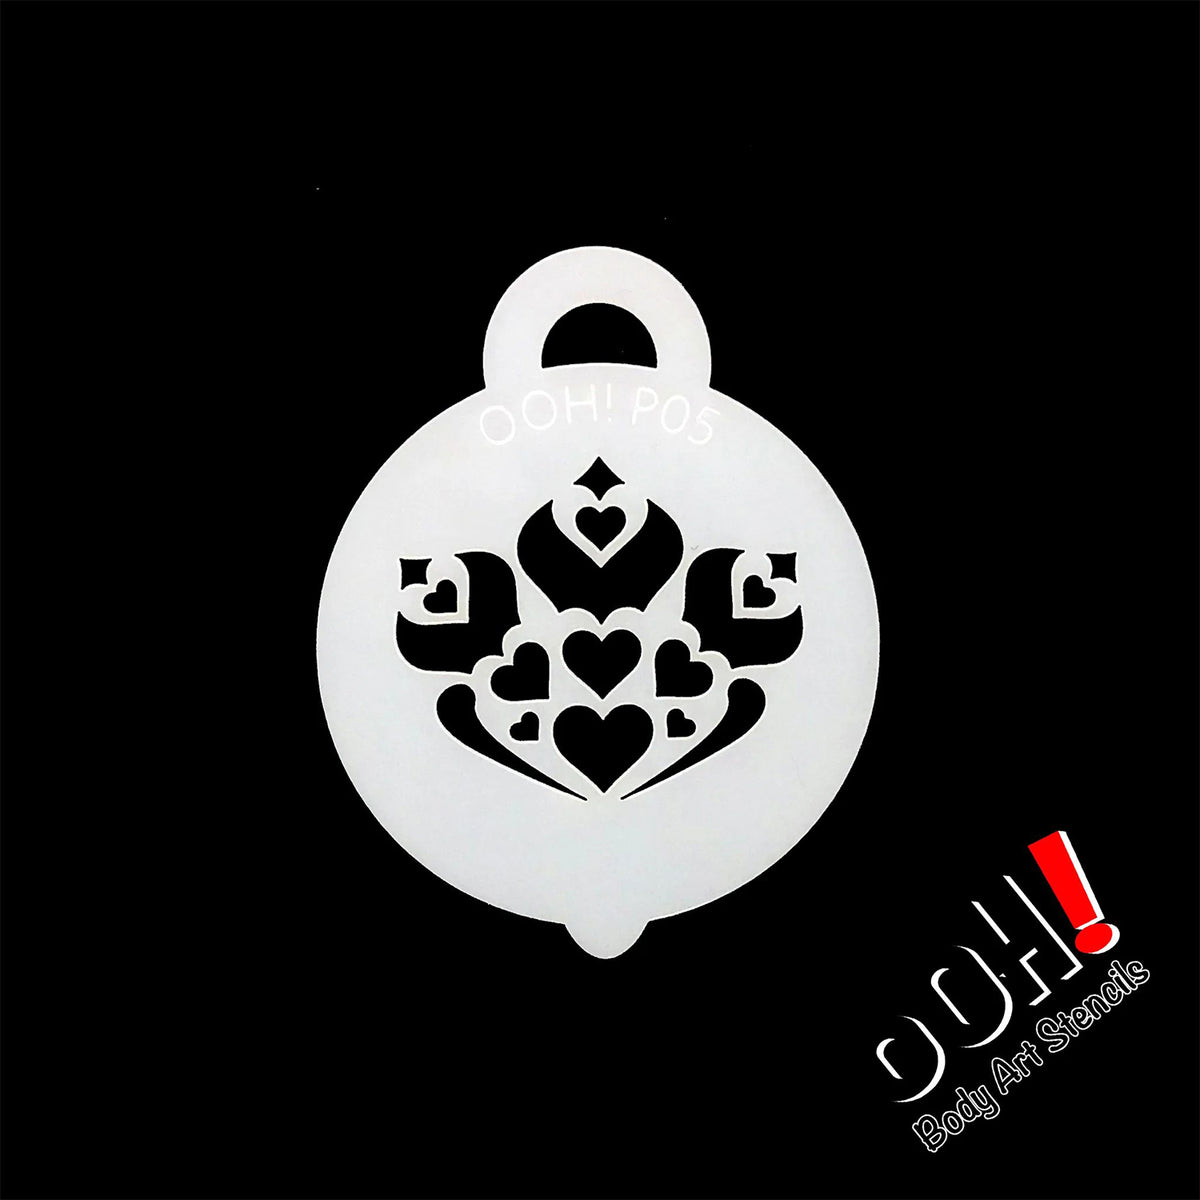 Ooh! Petite Stencil - Royal Heart